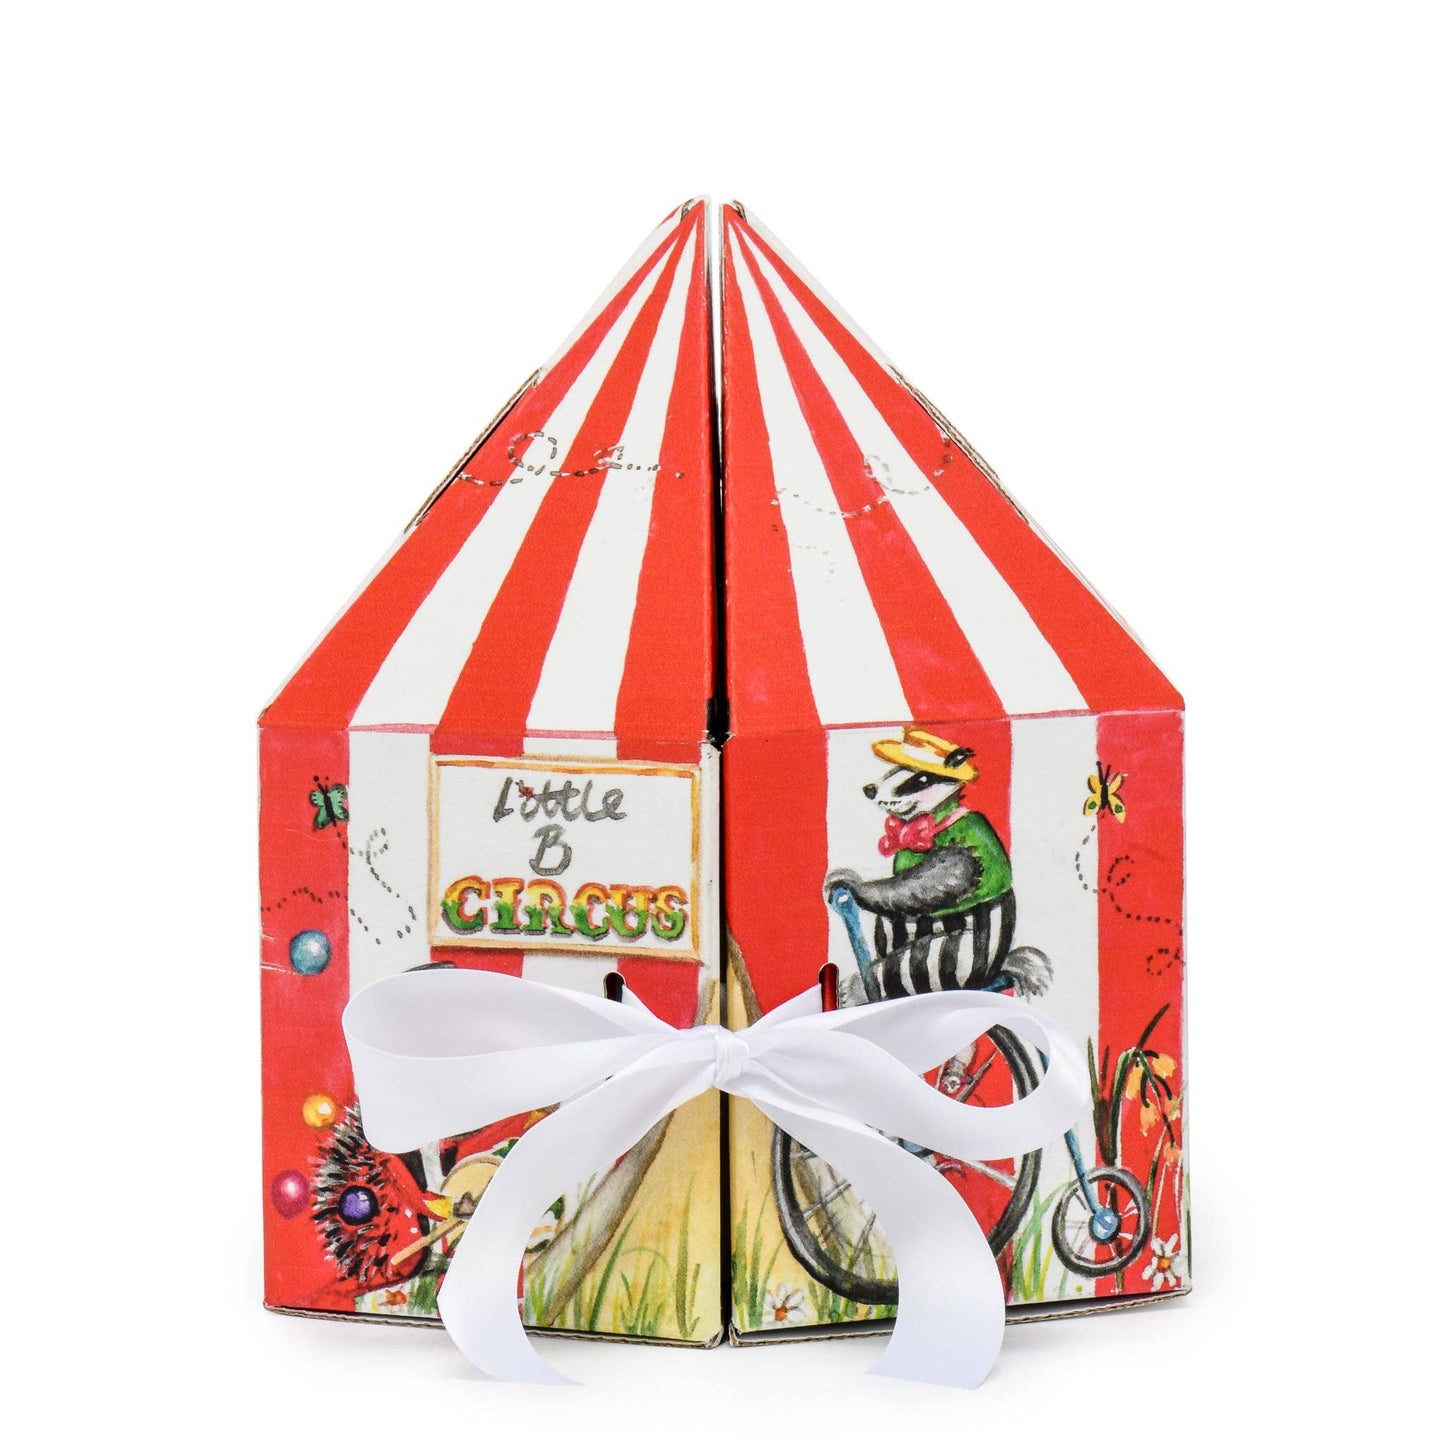 BRAMLEY - Little B Circus Tent Children's Bathtime Gift Set